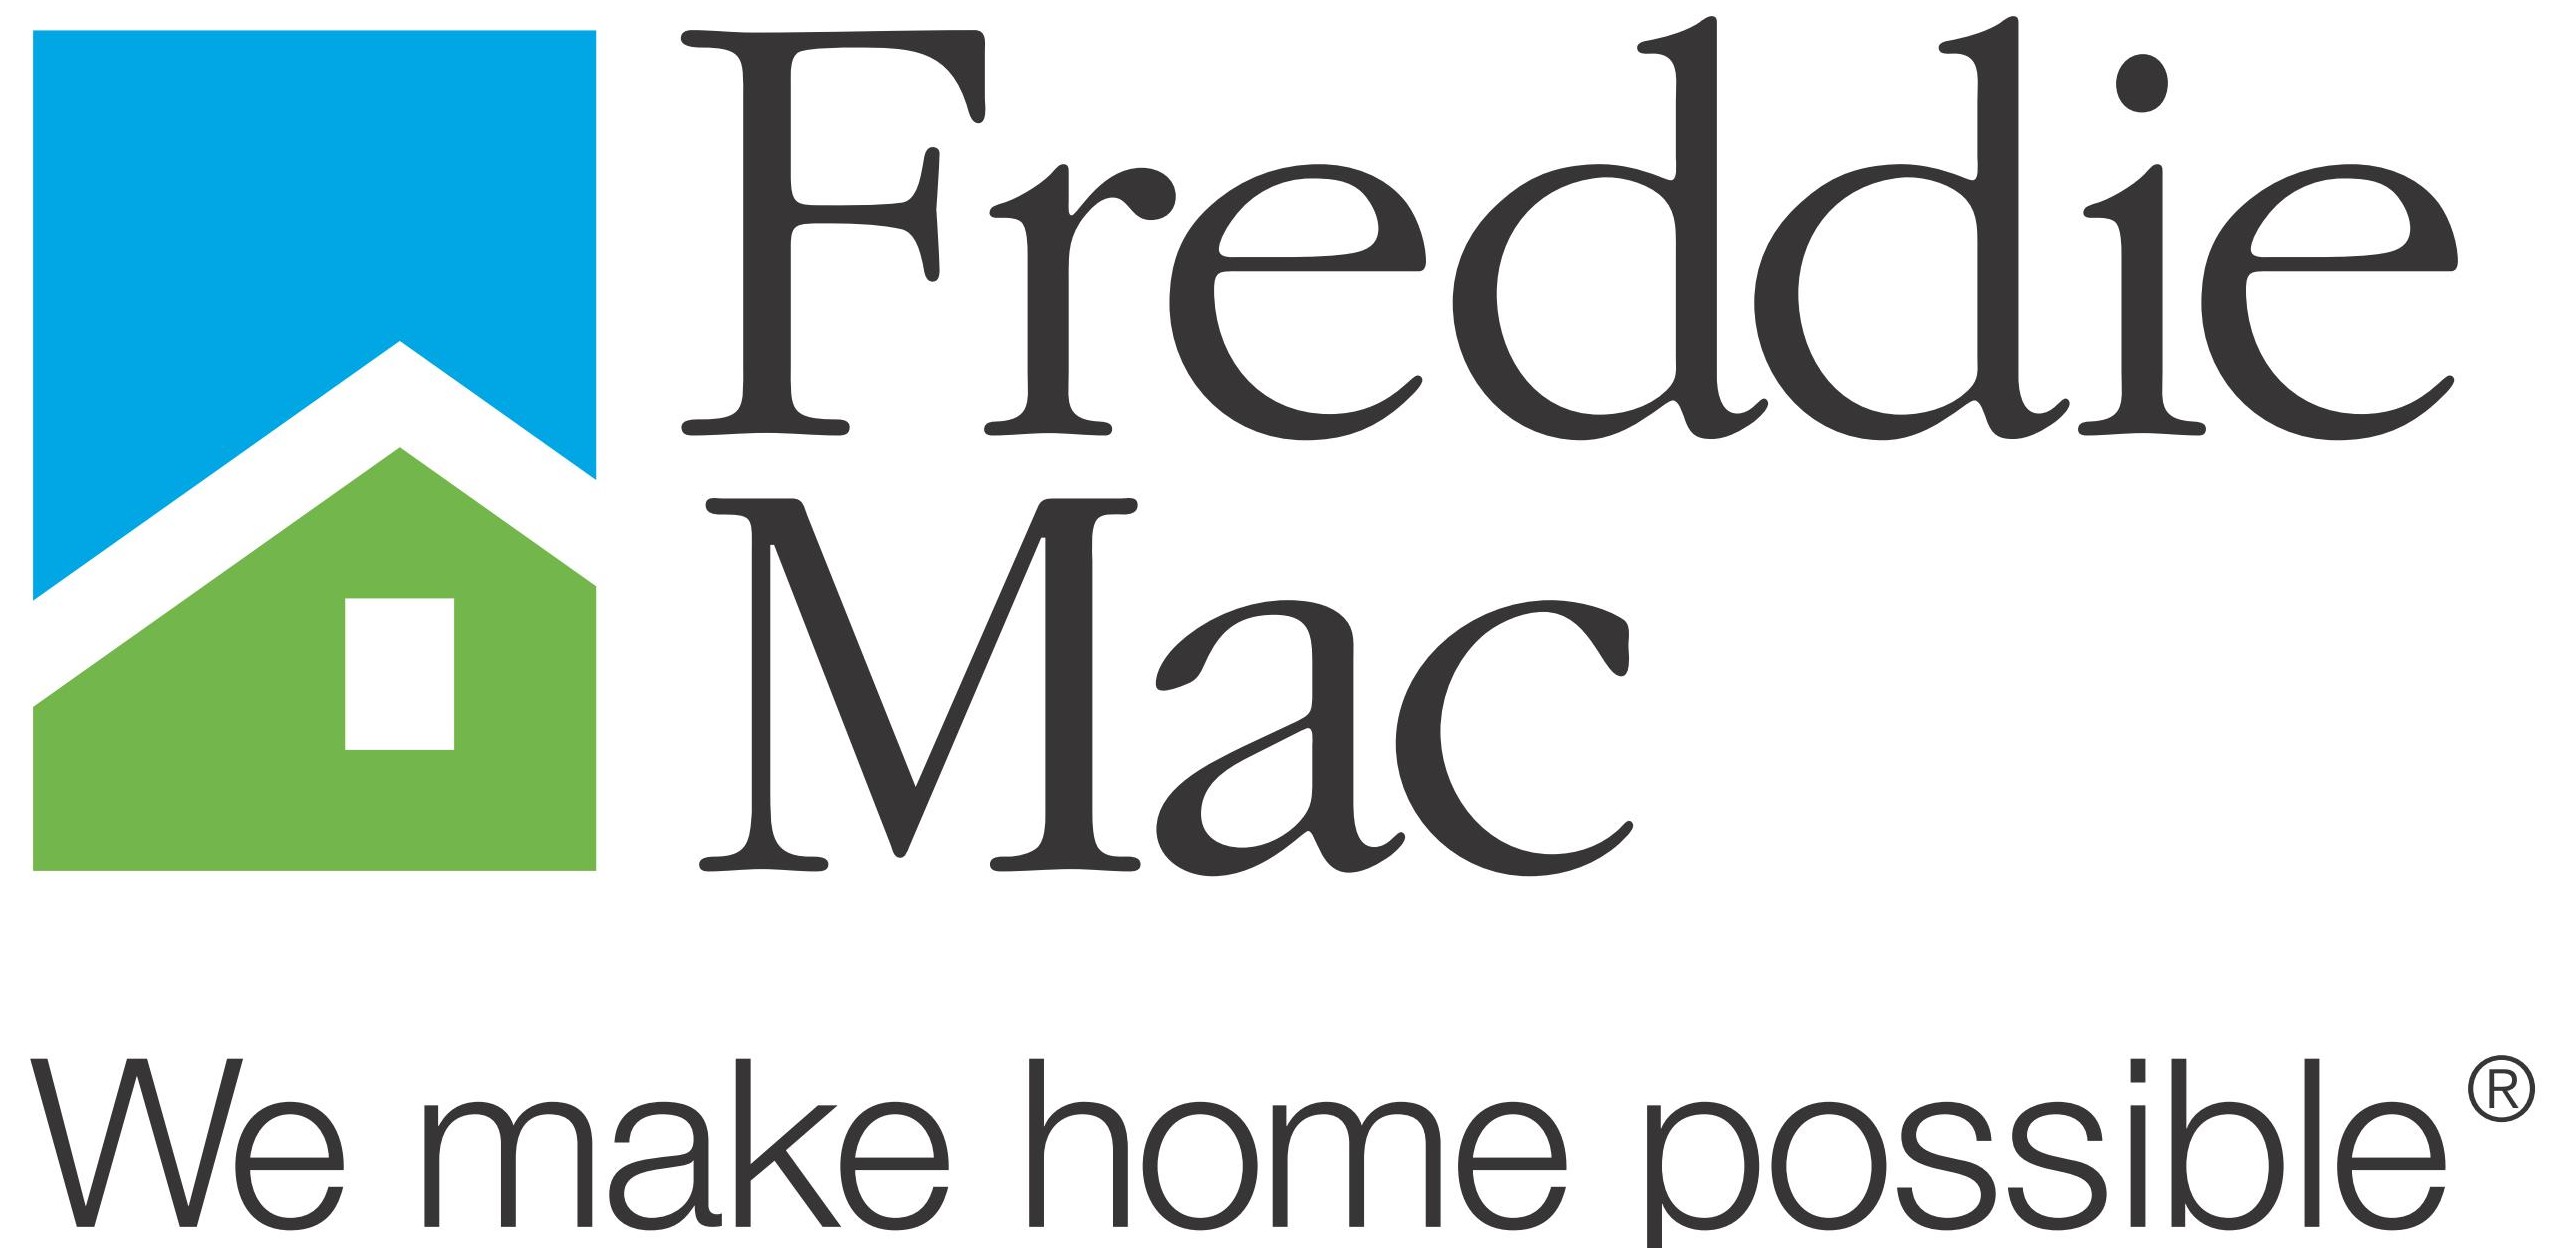 Freddie Mac Logo Png - Freddie Mac Logo, Transparent background PNG HD thumbnail